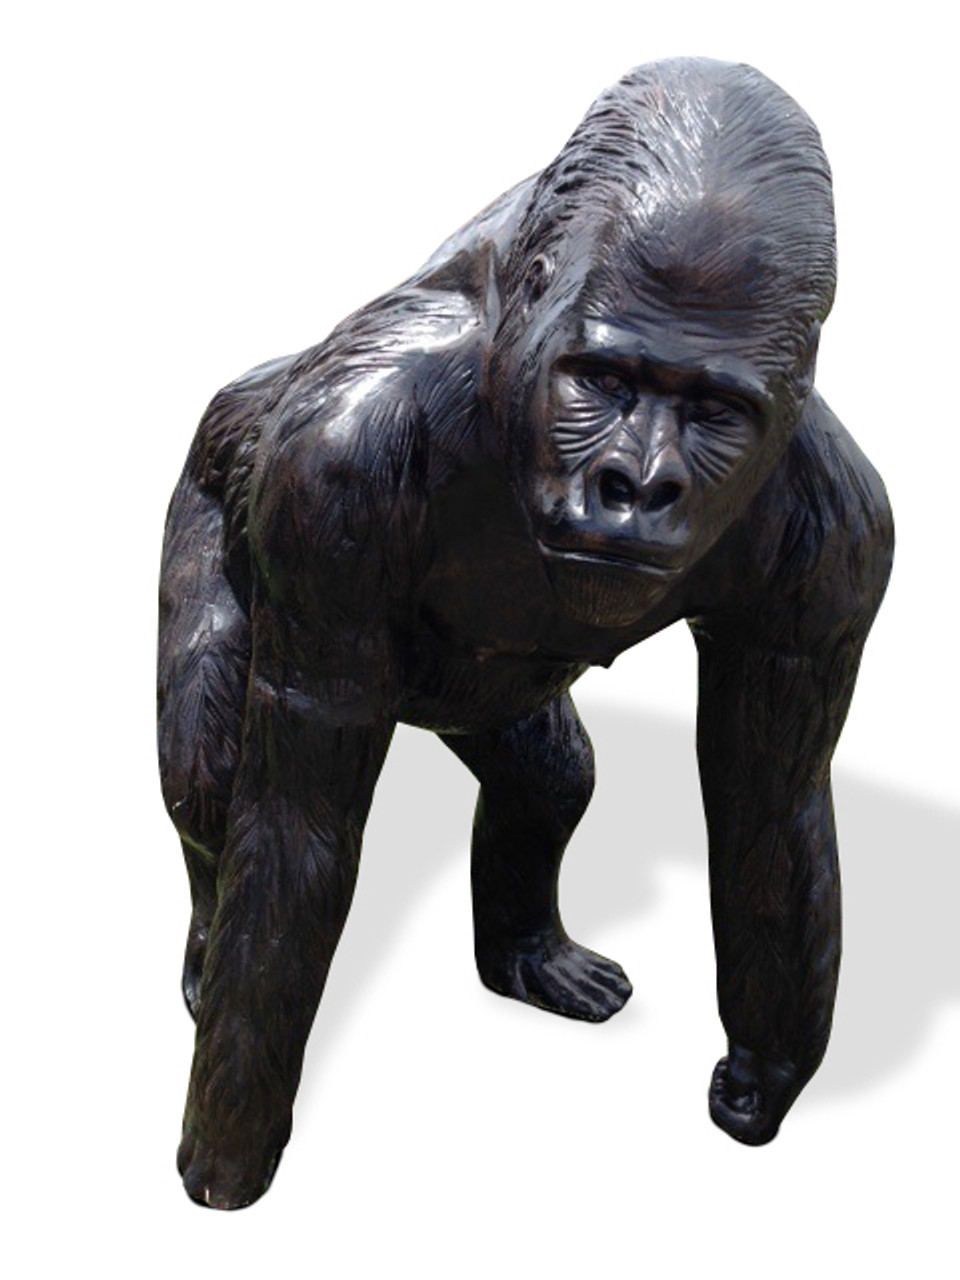 Lifesize Gorilla Metal Garden Statue and Yard Art - Sculpture